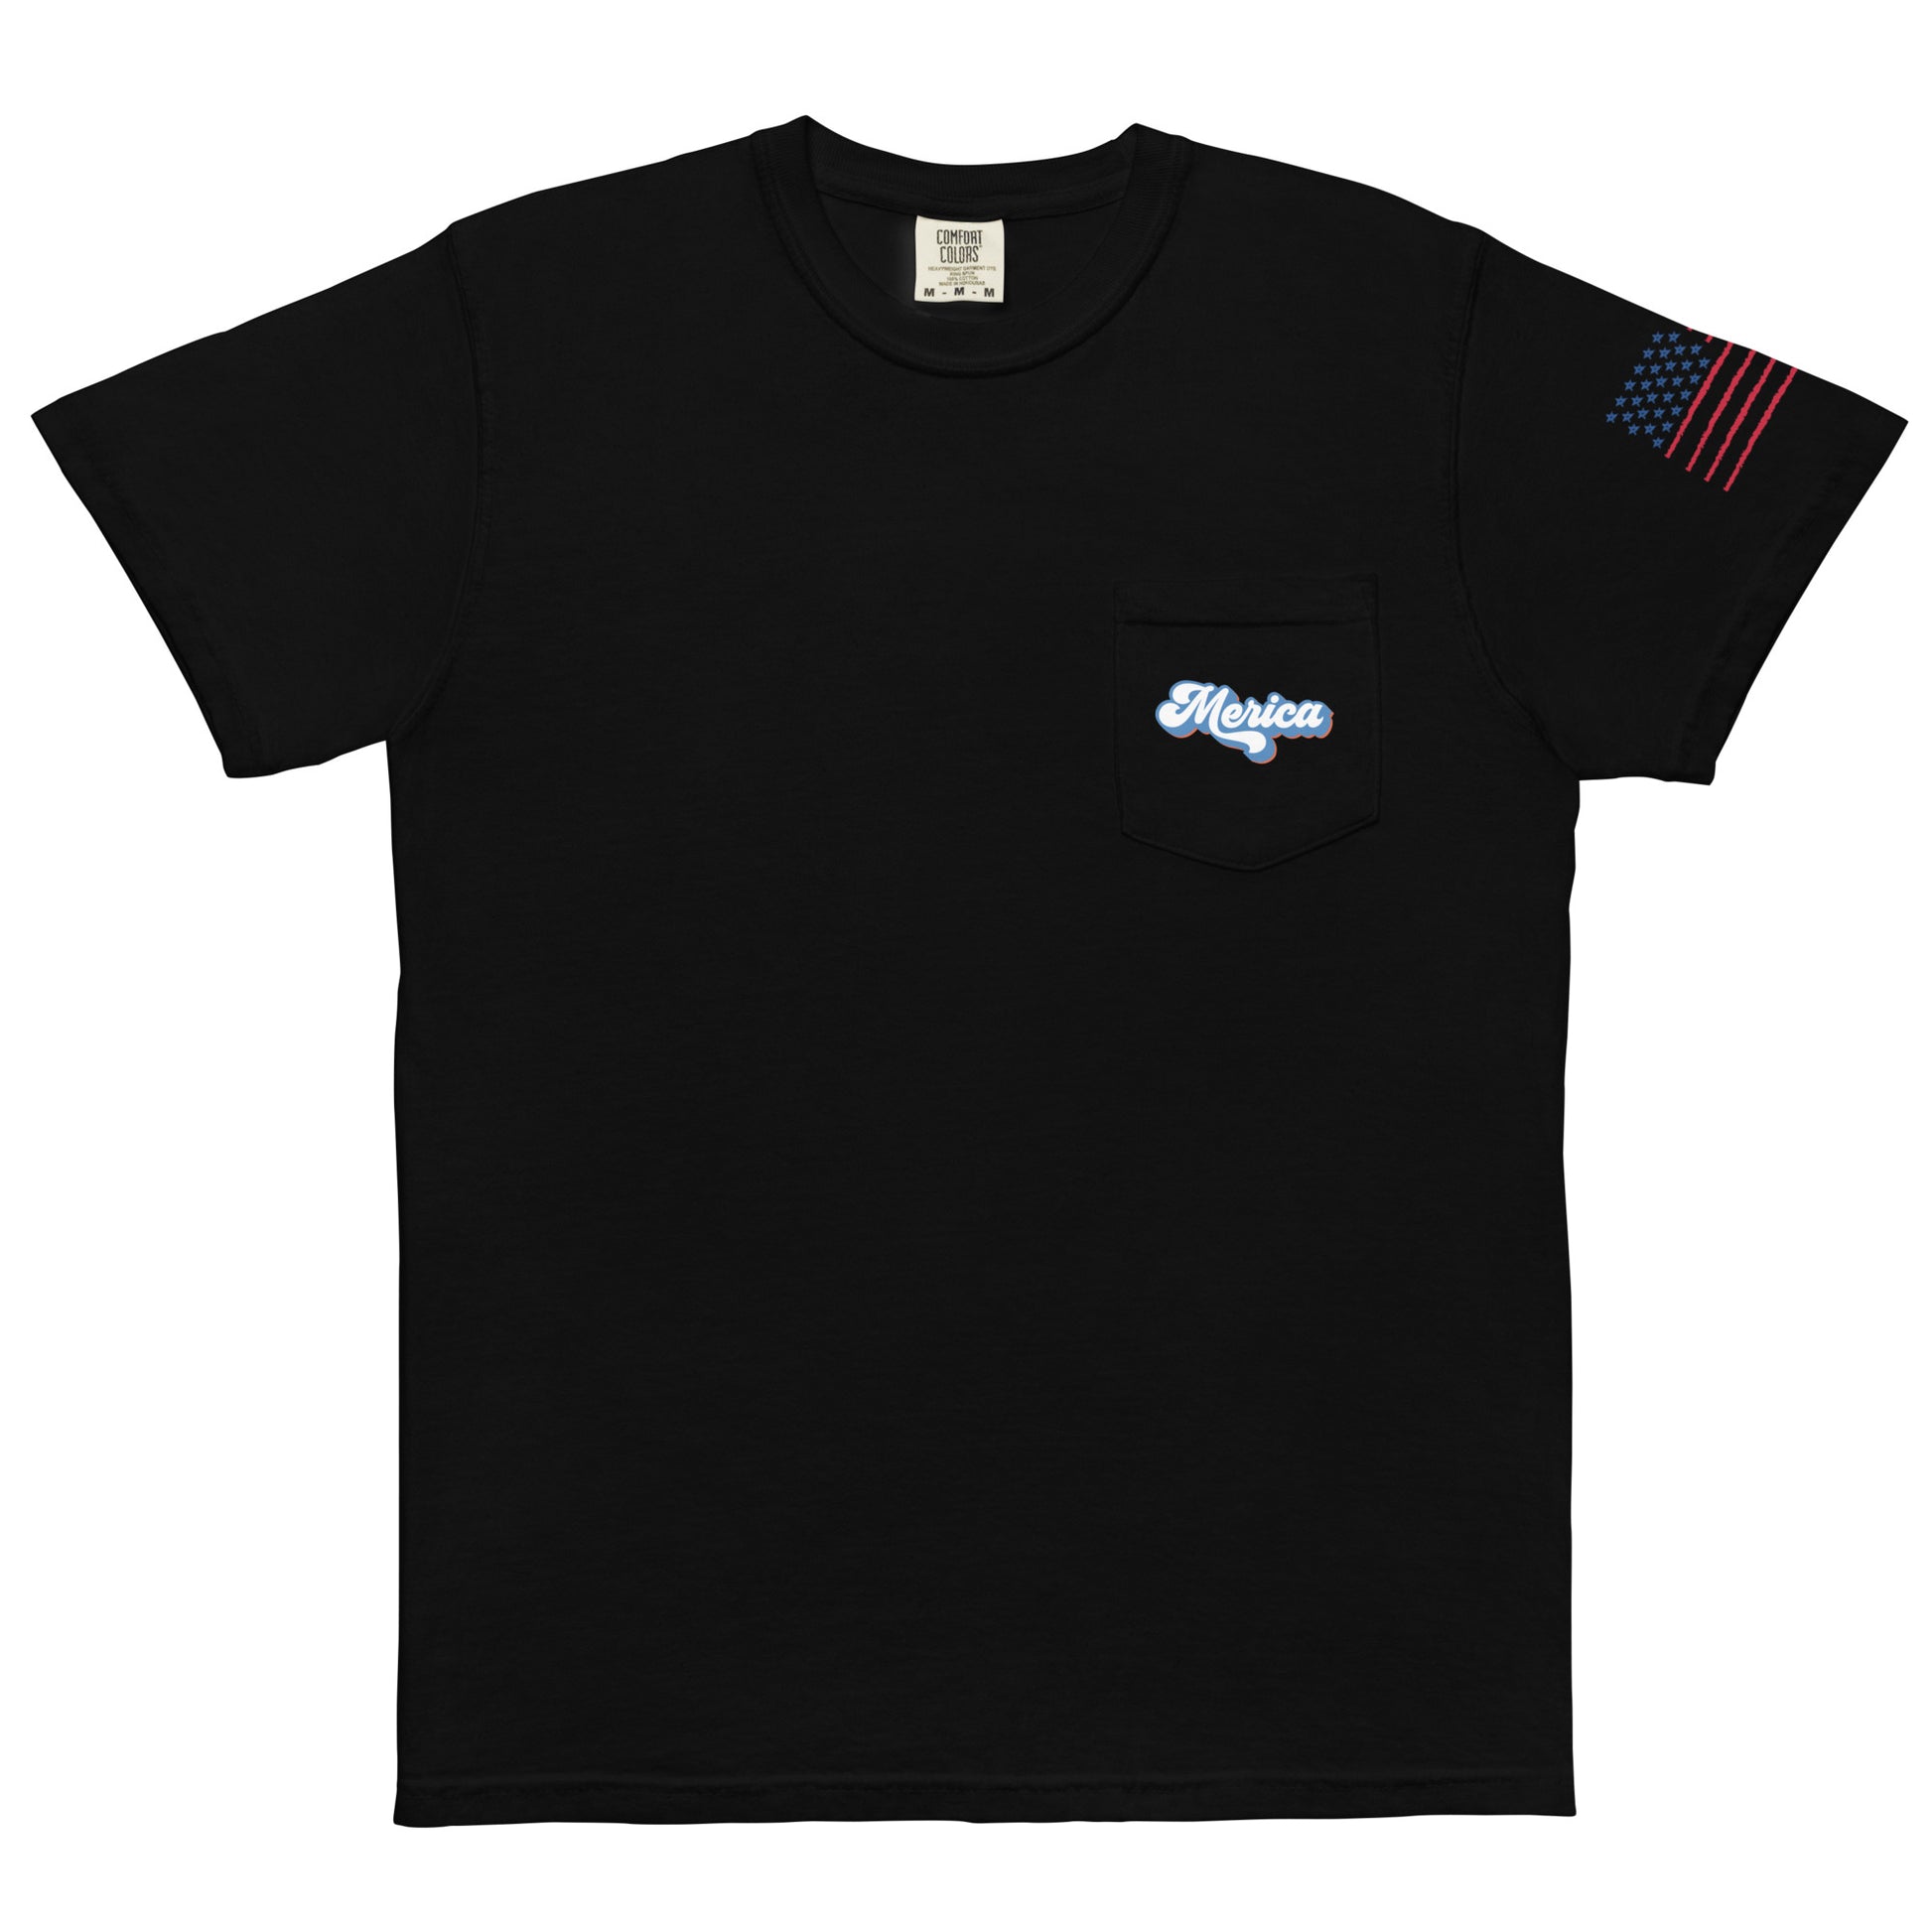 God bless America garment-dyed pocket t-shirt - Black / S - Sport Finesse